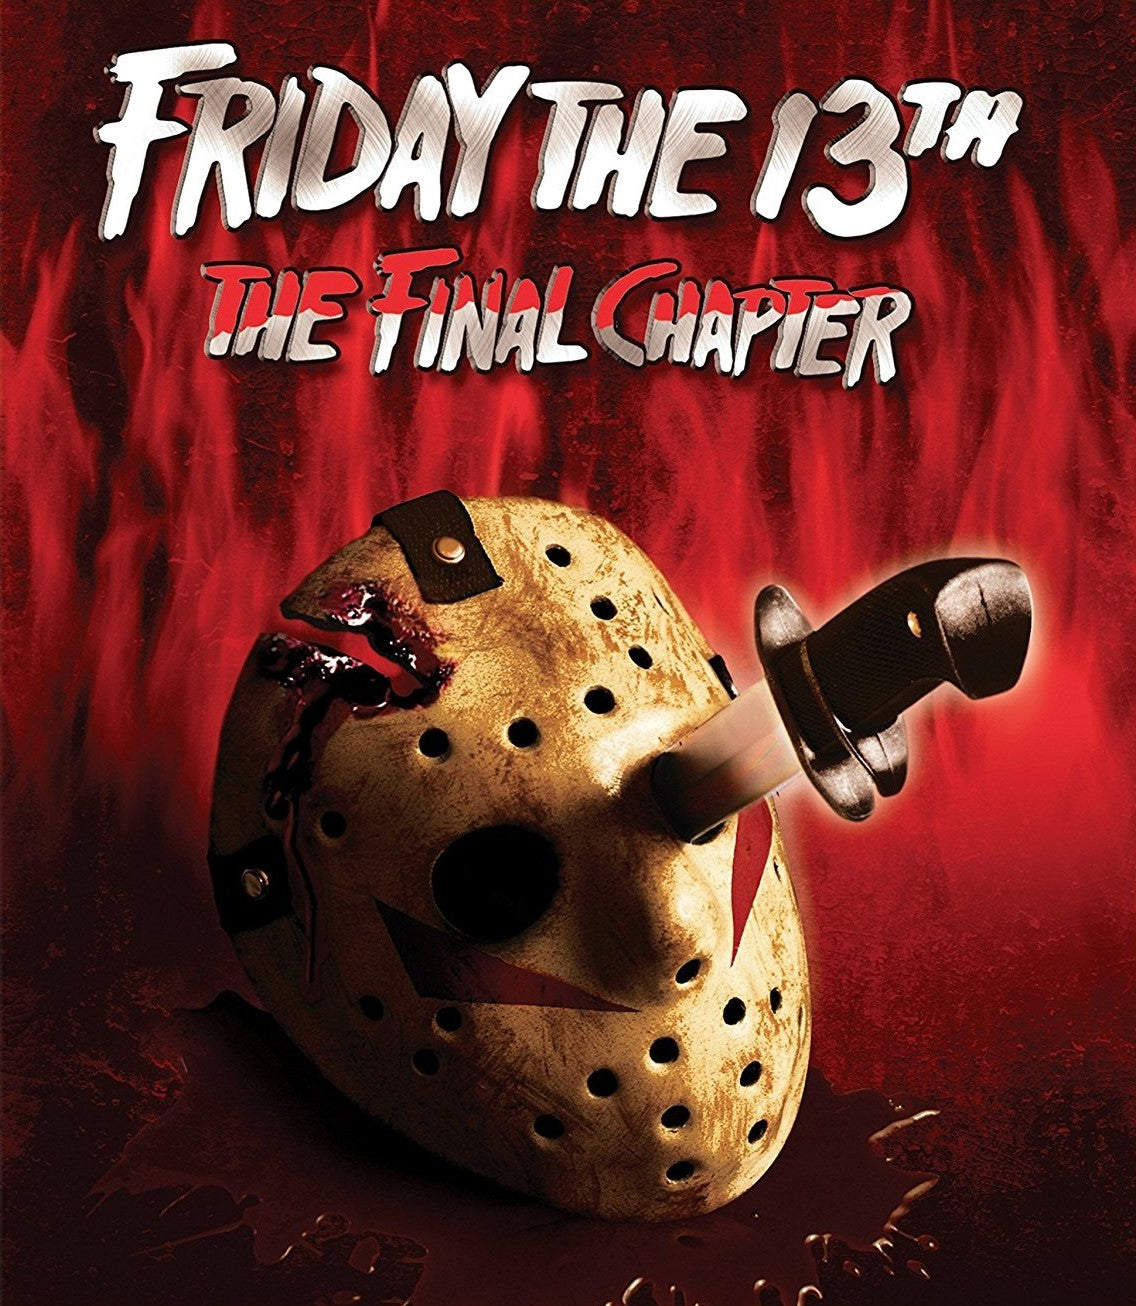 Friday the 13th Part 3 – Mondo